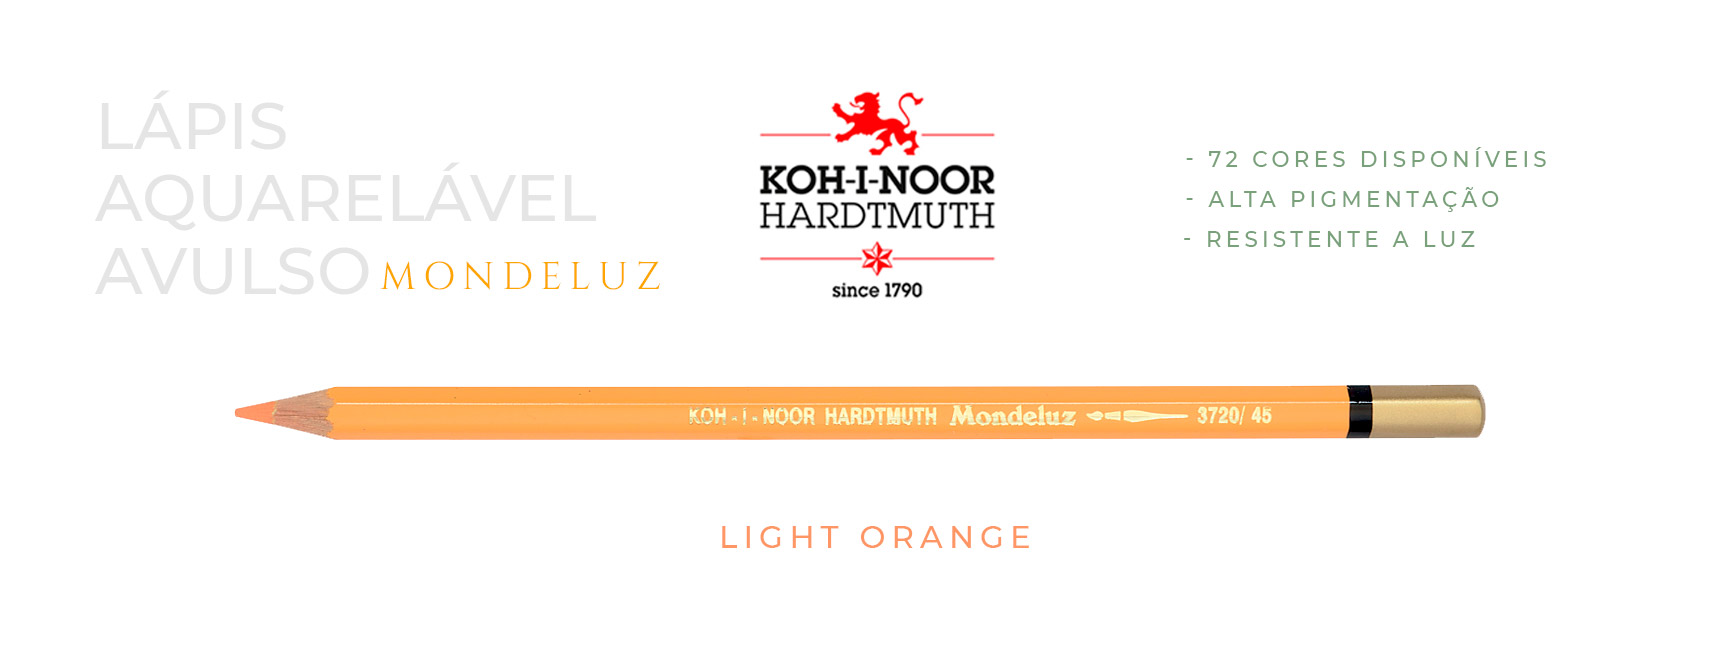 Lápis aquarelável avulso light orange koh-i-noor